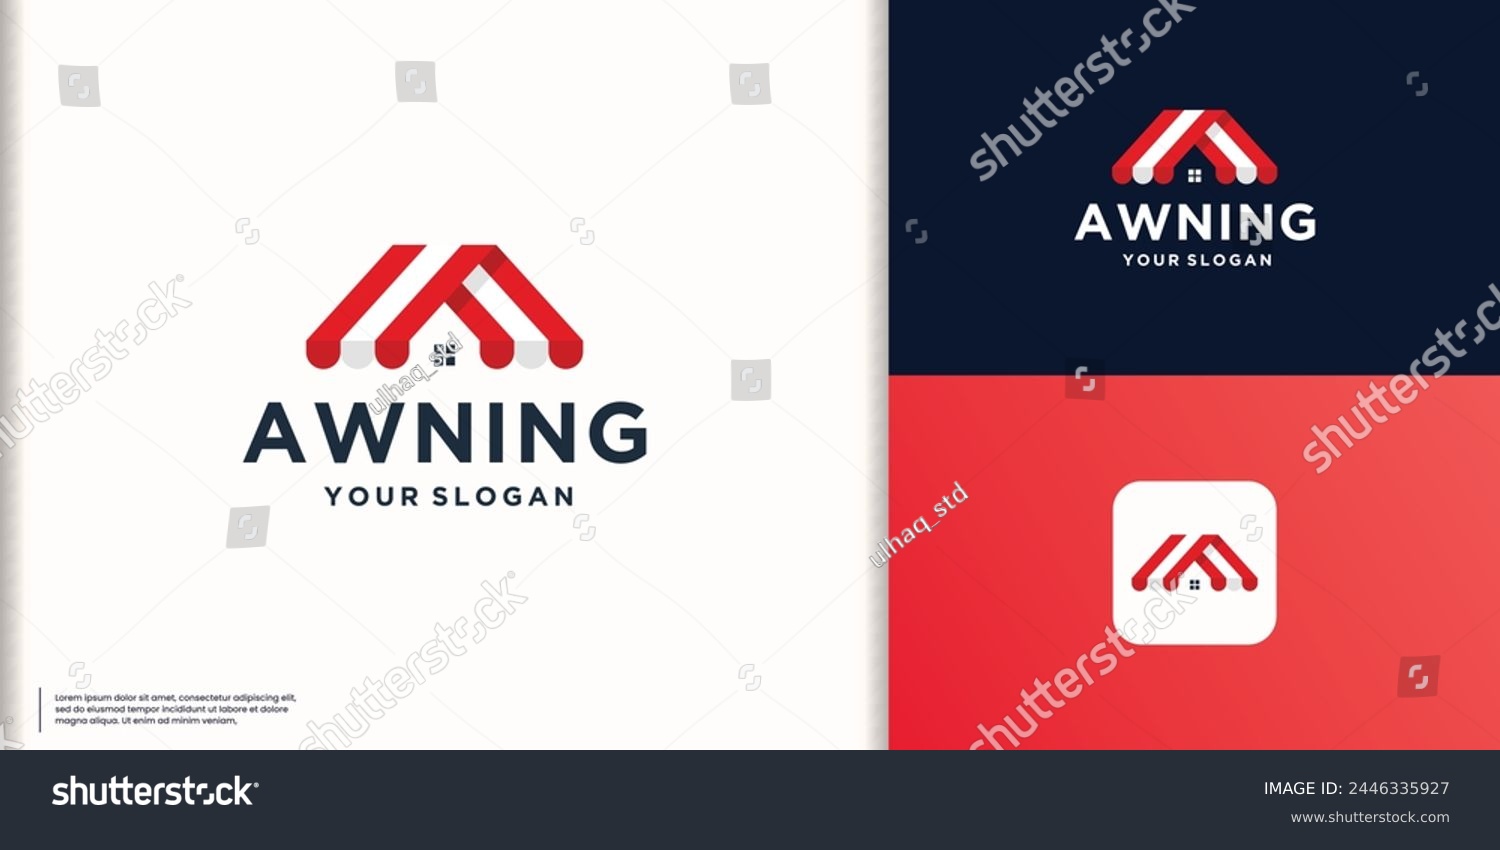 SVG of simple and modern logo awning logo design inspiration. svg